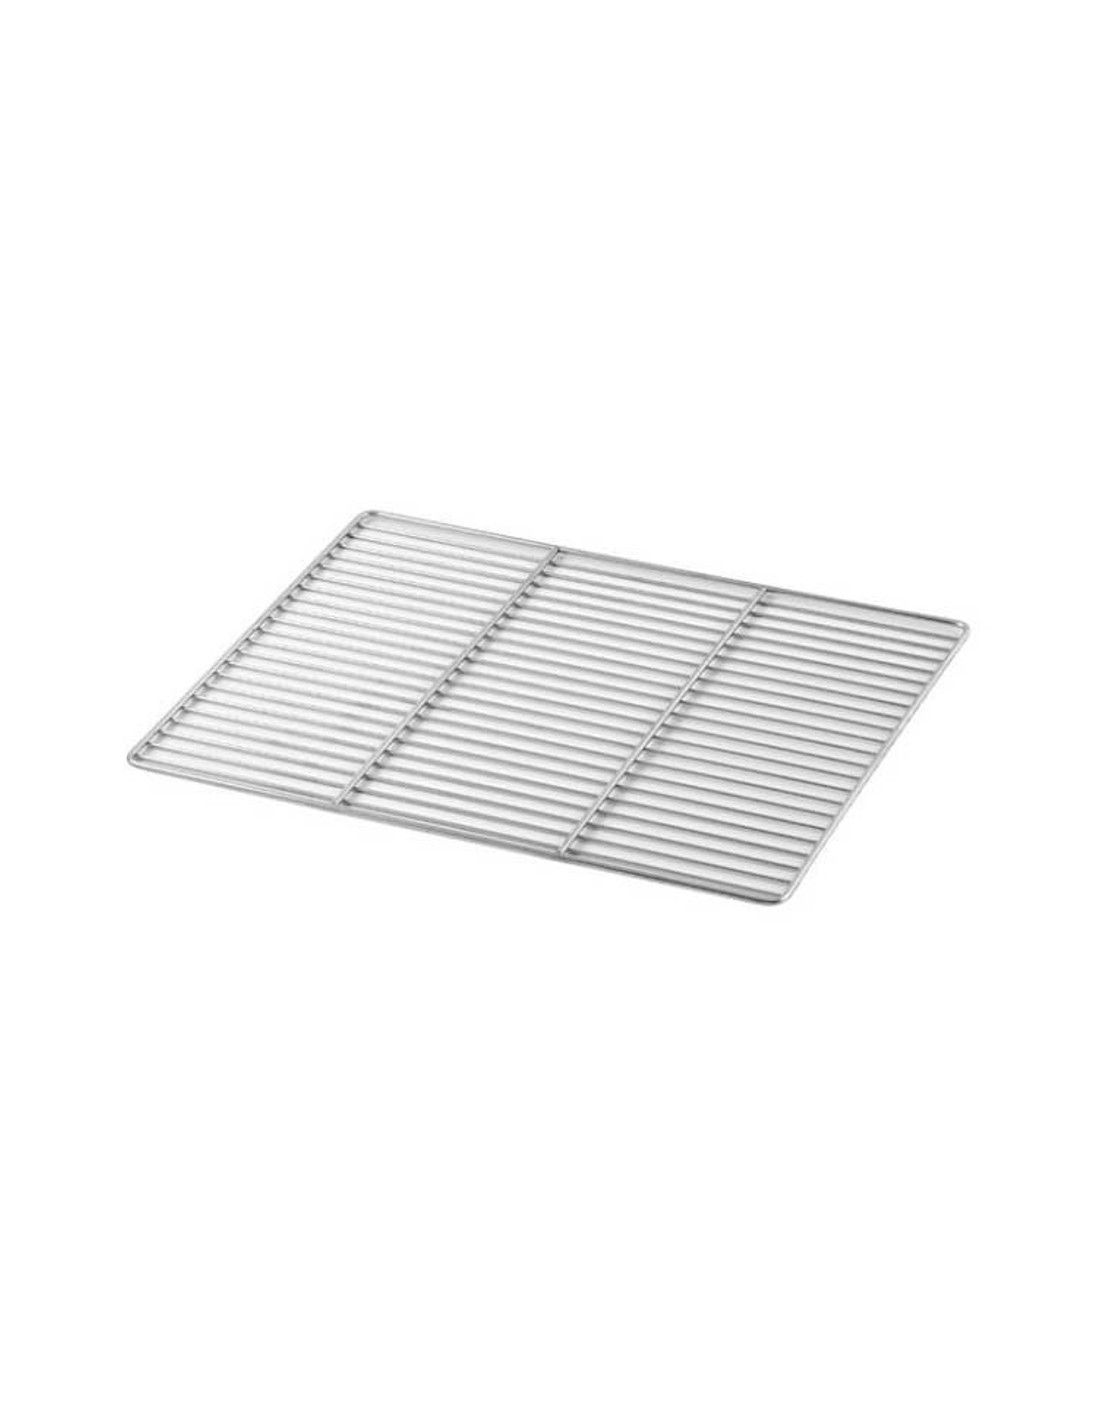 Plastic coated grid - Cm 50.5 x 41.5